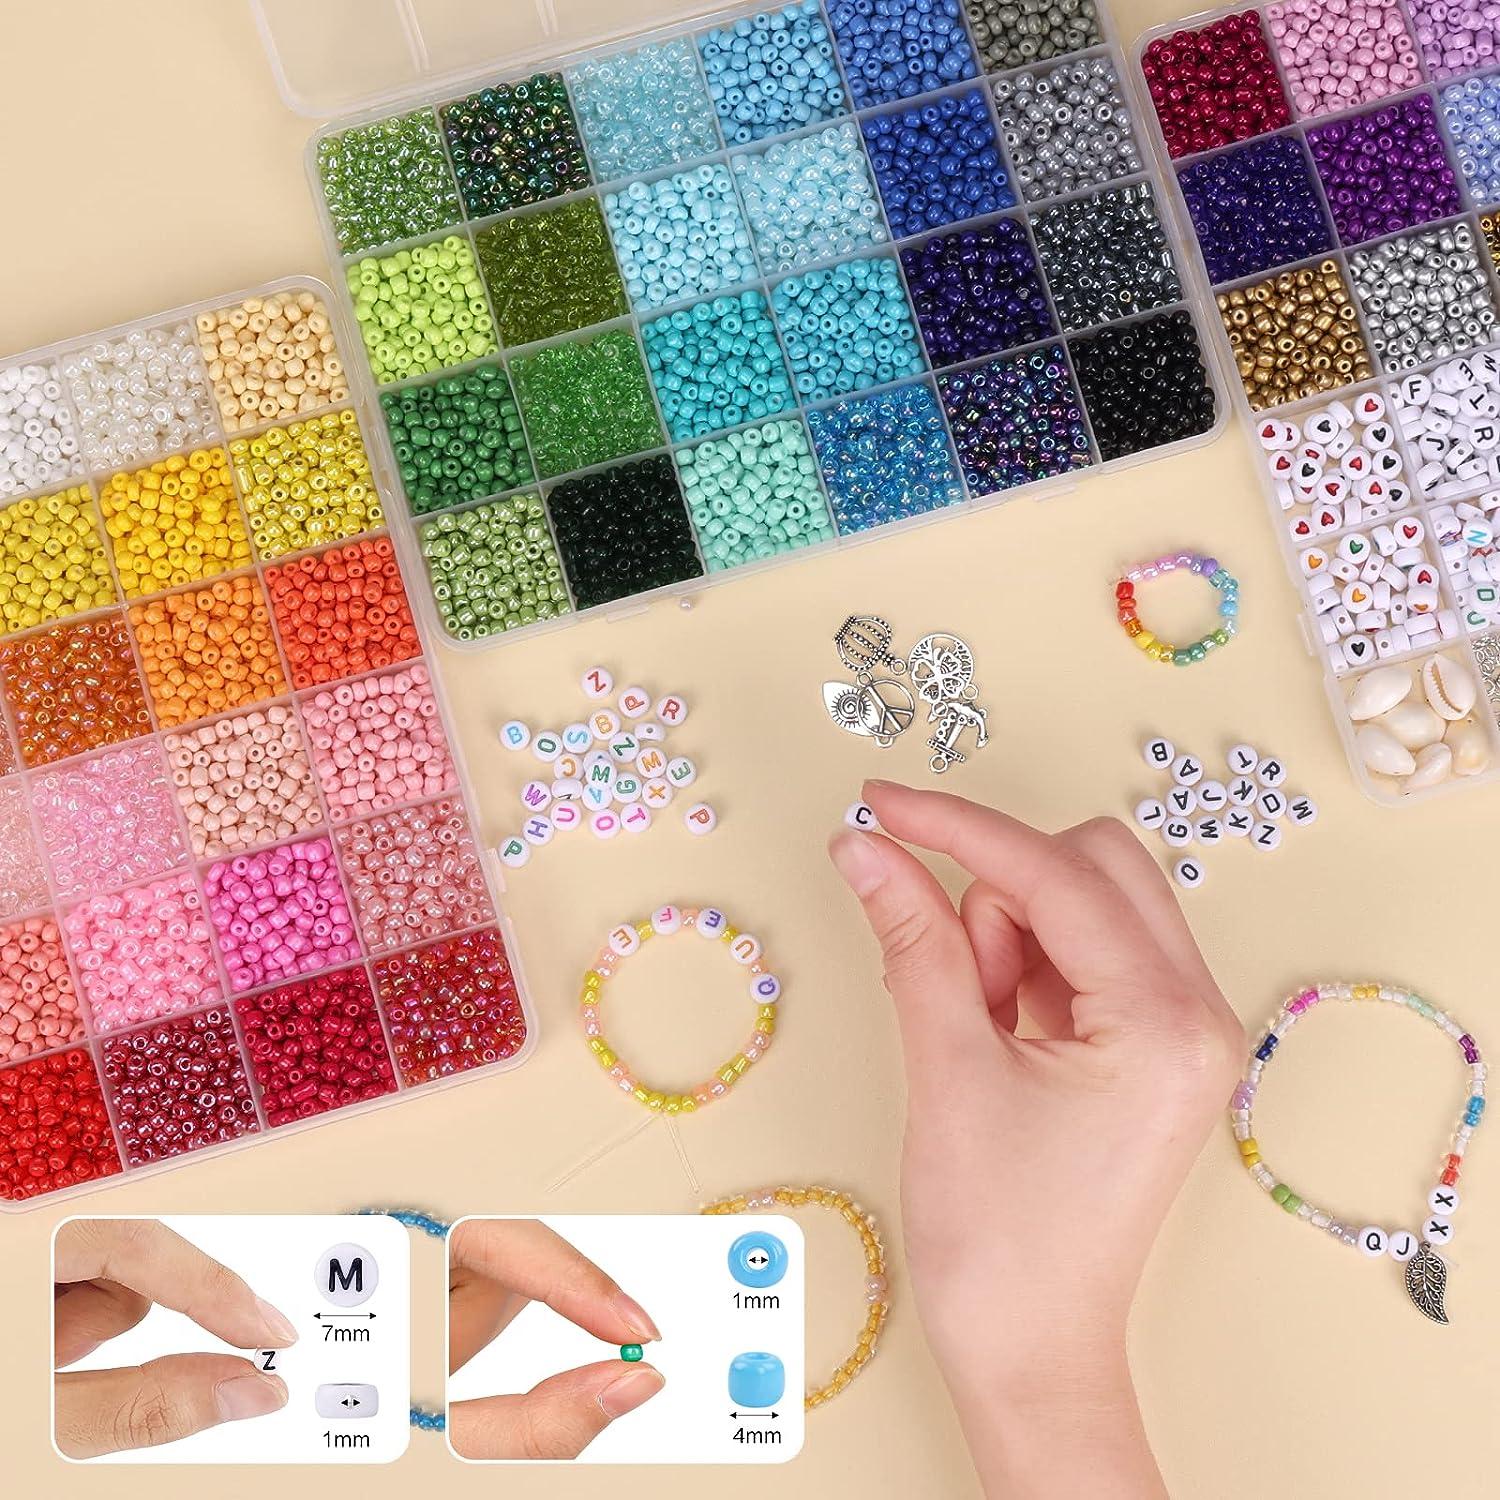 QUEFE 9000pcs 4mm Glass Seed Beads for Bracelet Making Kit 60